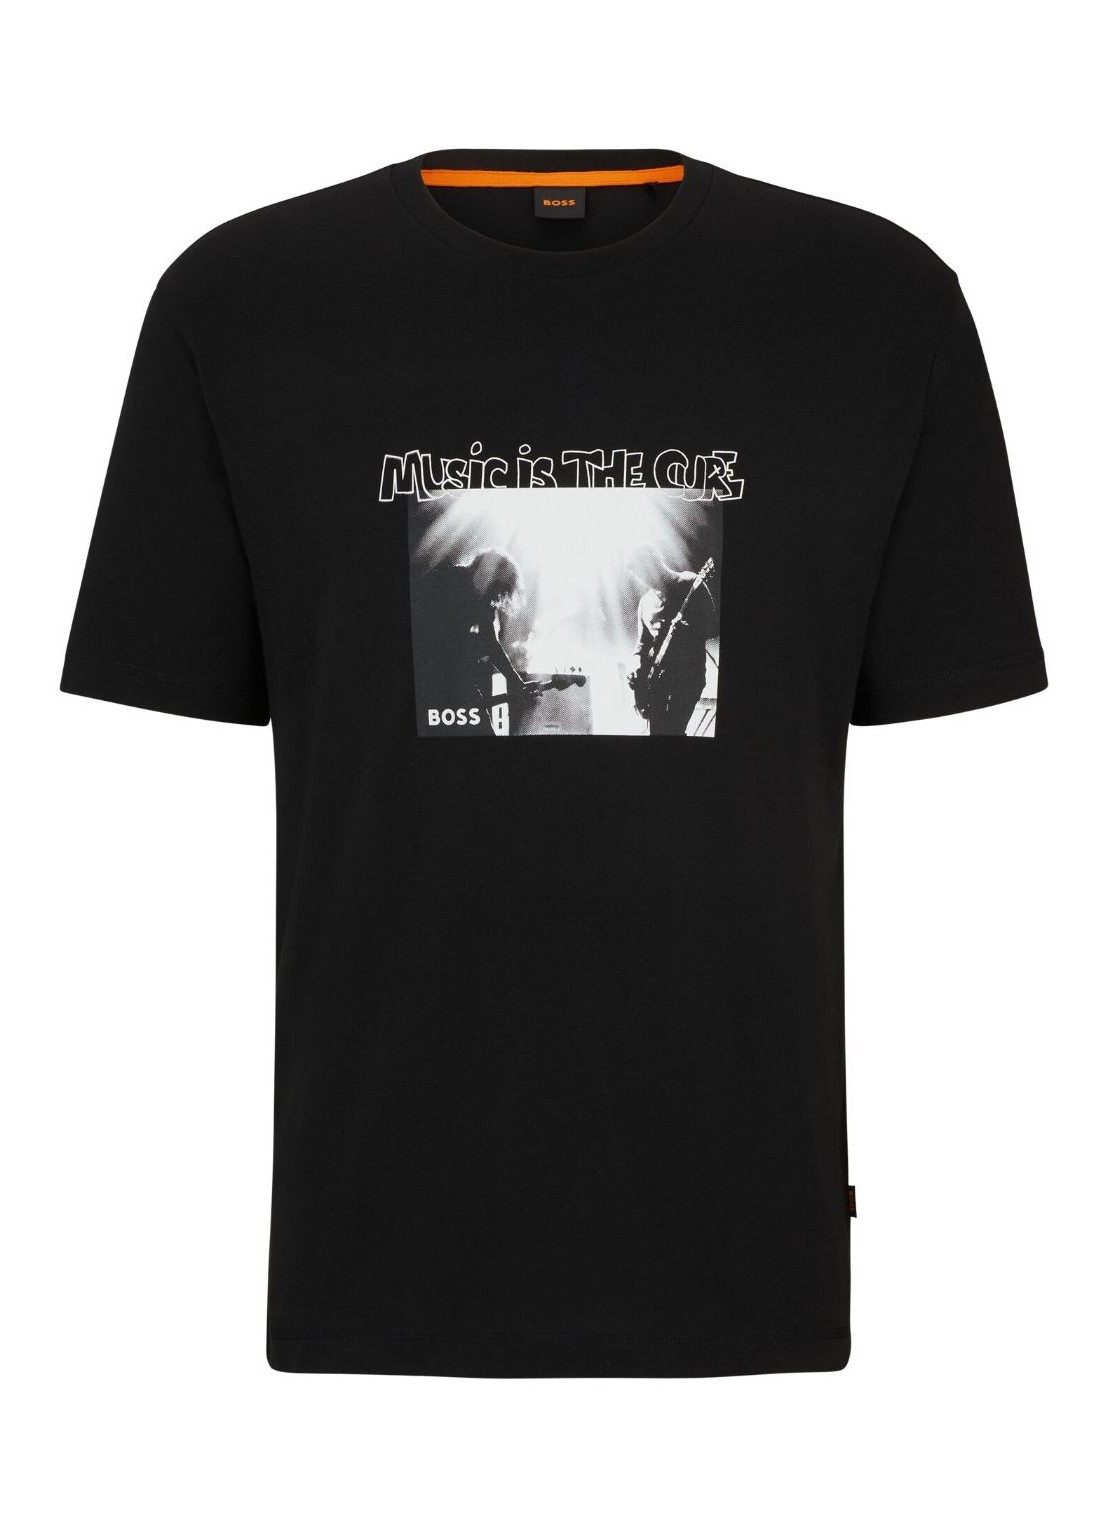 Camiseta boss t-shirt mantescorpion - 50510648 002 talla S
 